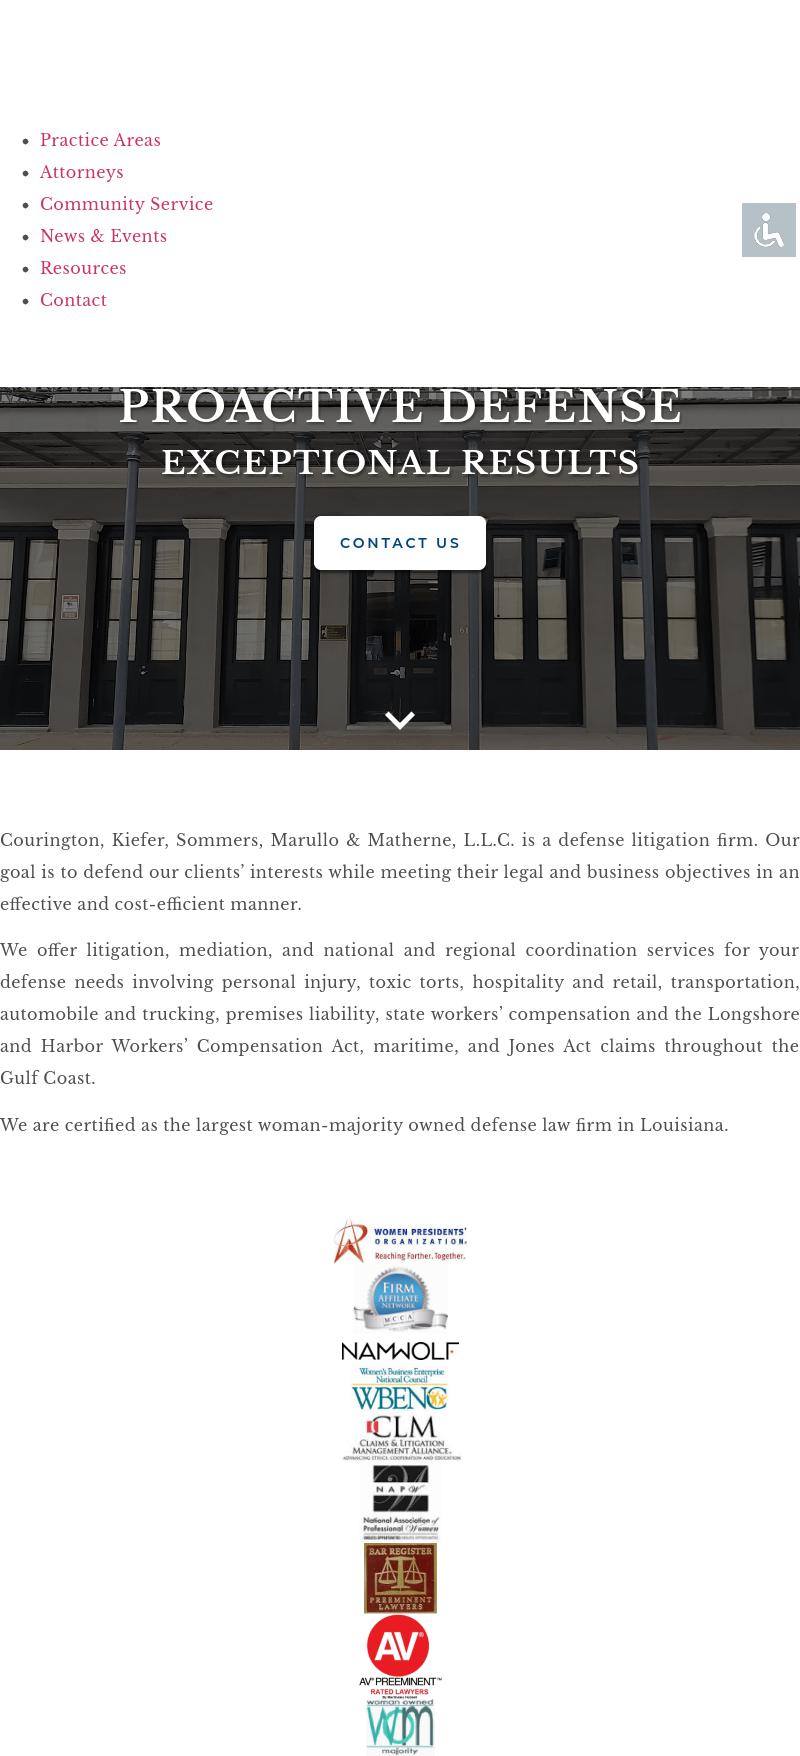 Courington Kiefer & Sommers LLC - New Orleans LA Lawyers